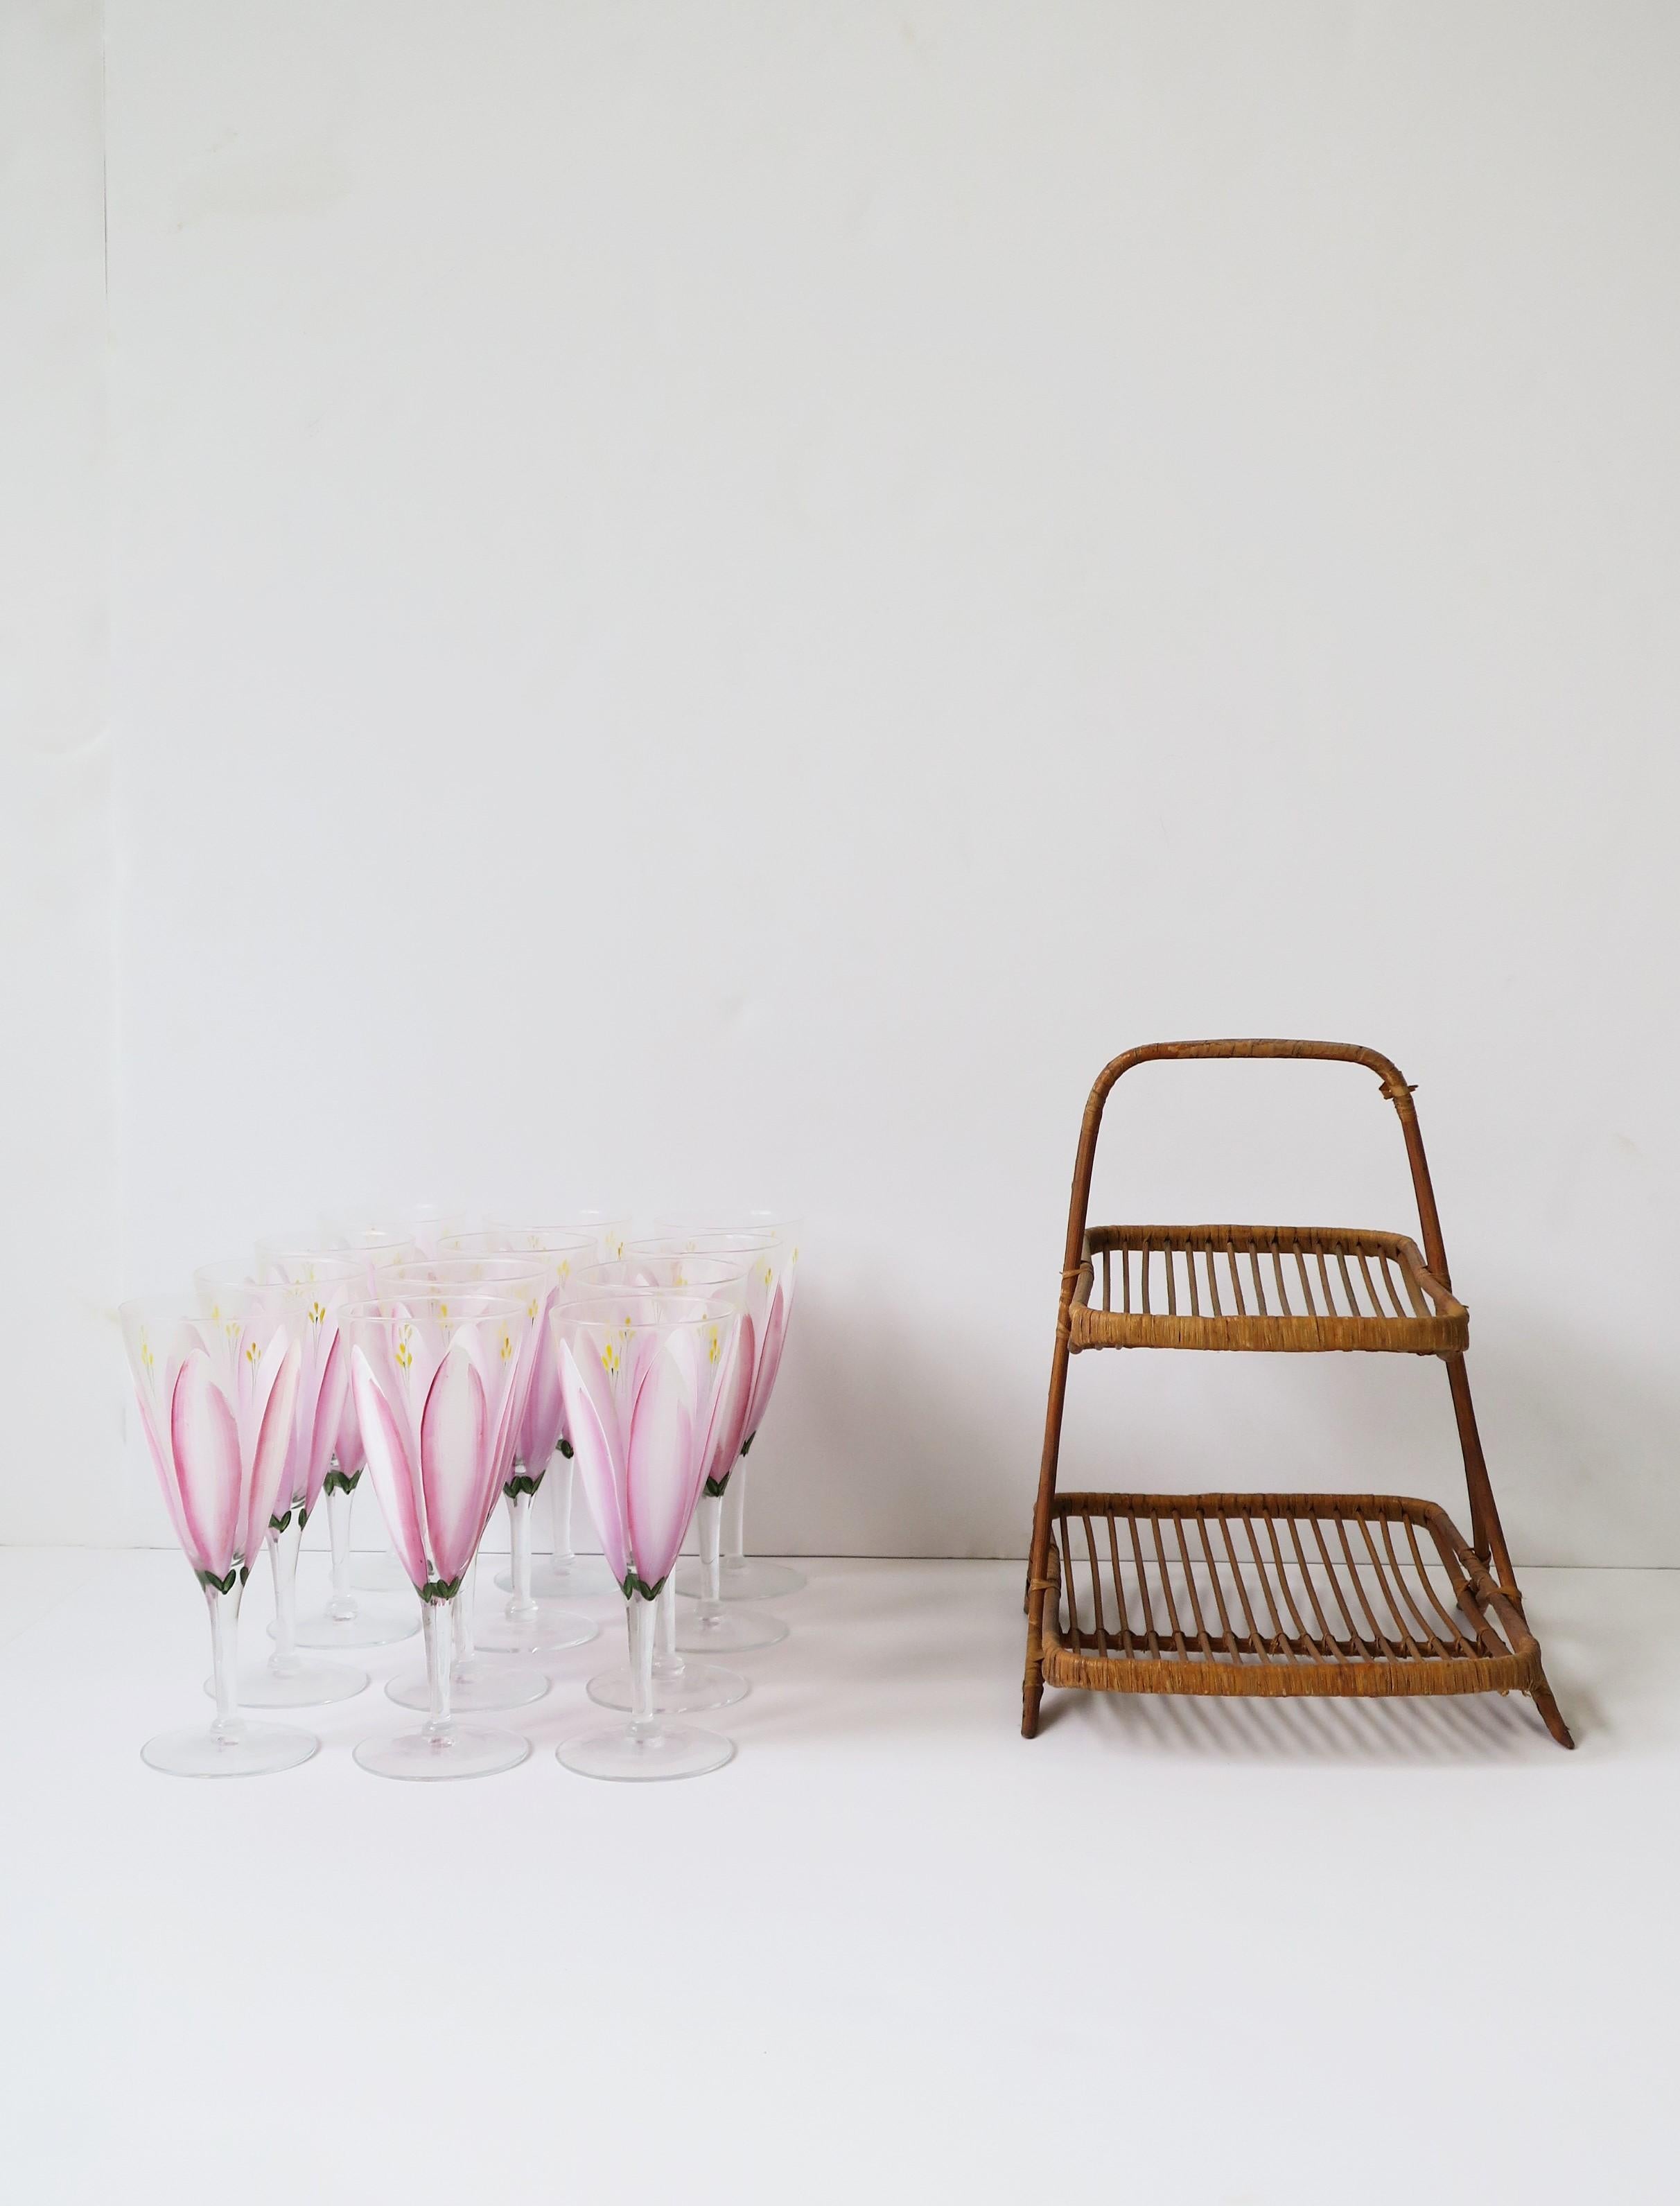 Champagne Flutes Glasses with Pink Tulip Flower Design, Set of 12 For Sale 4